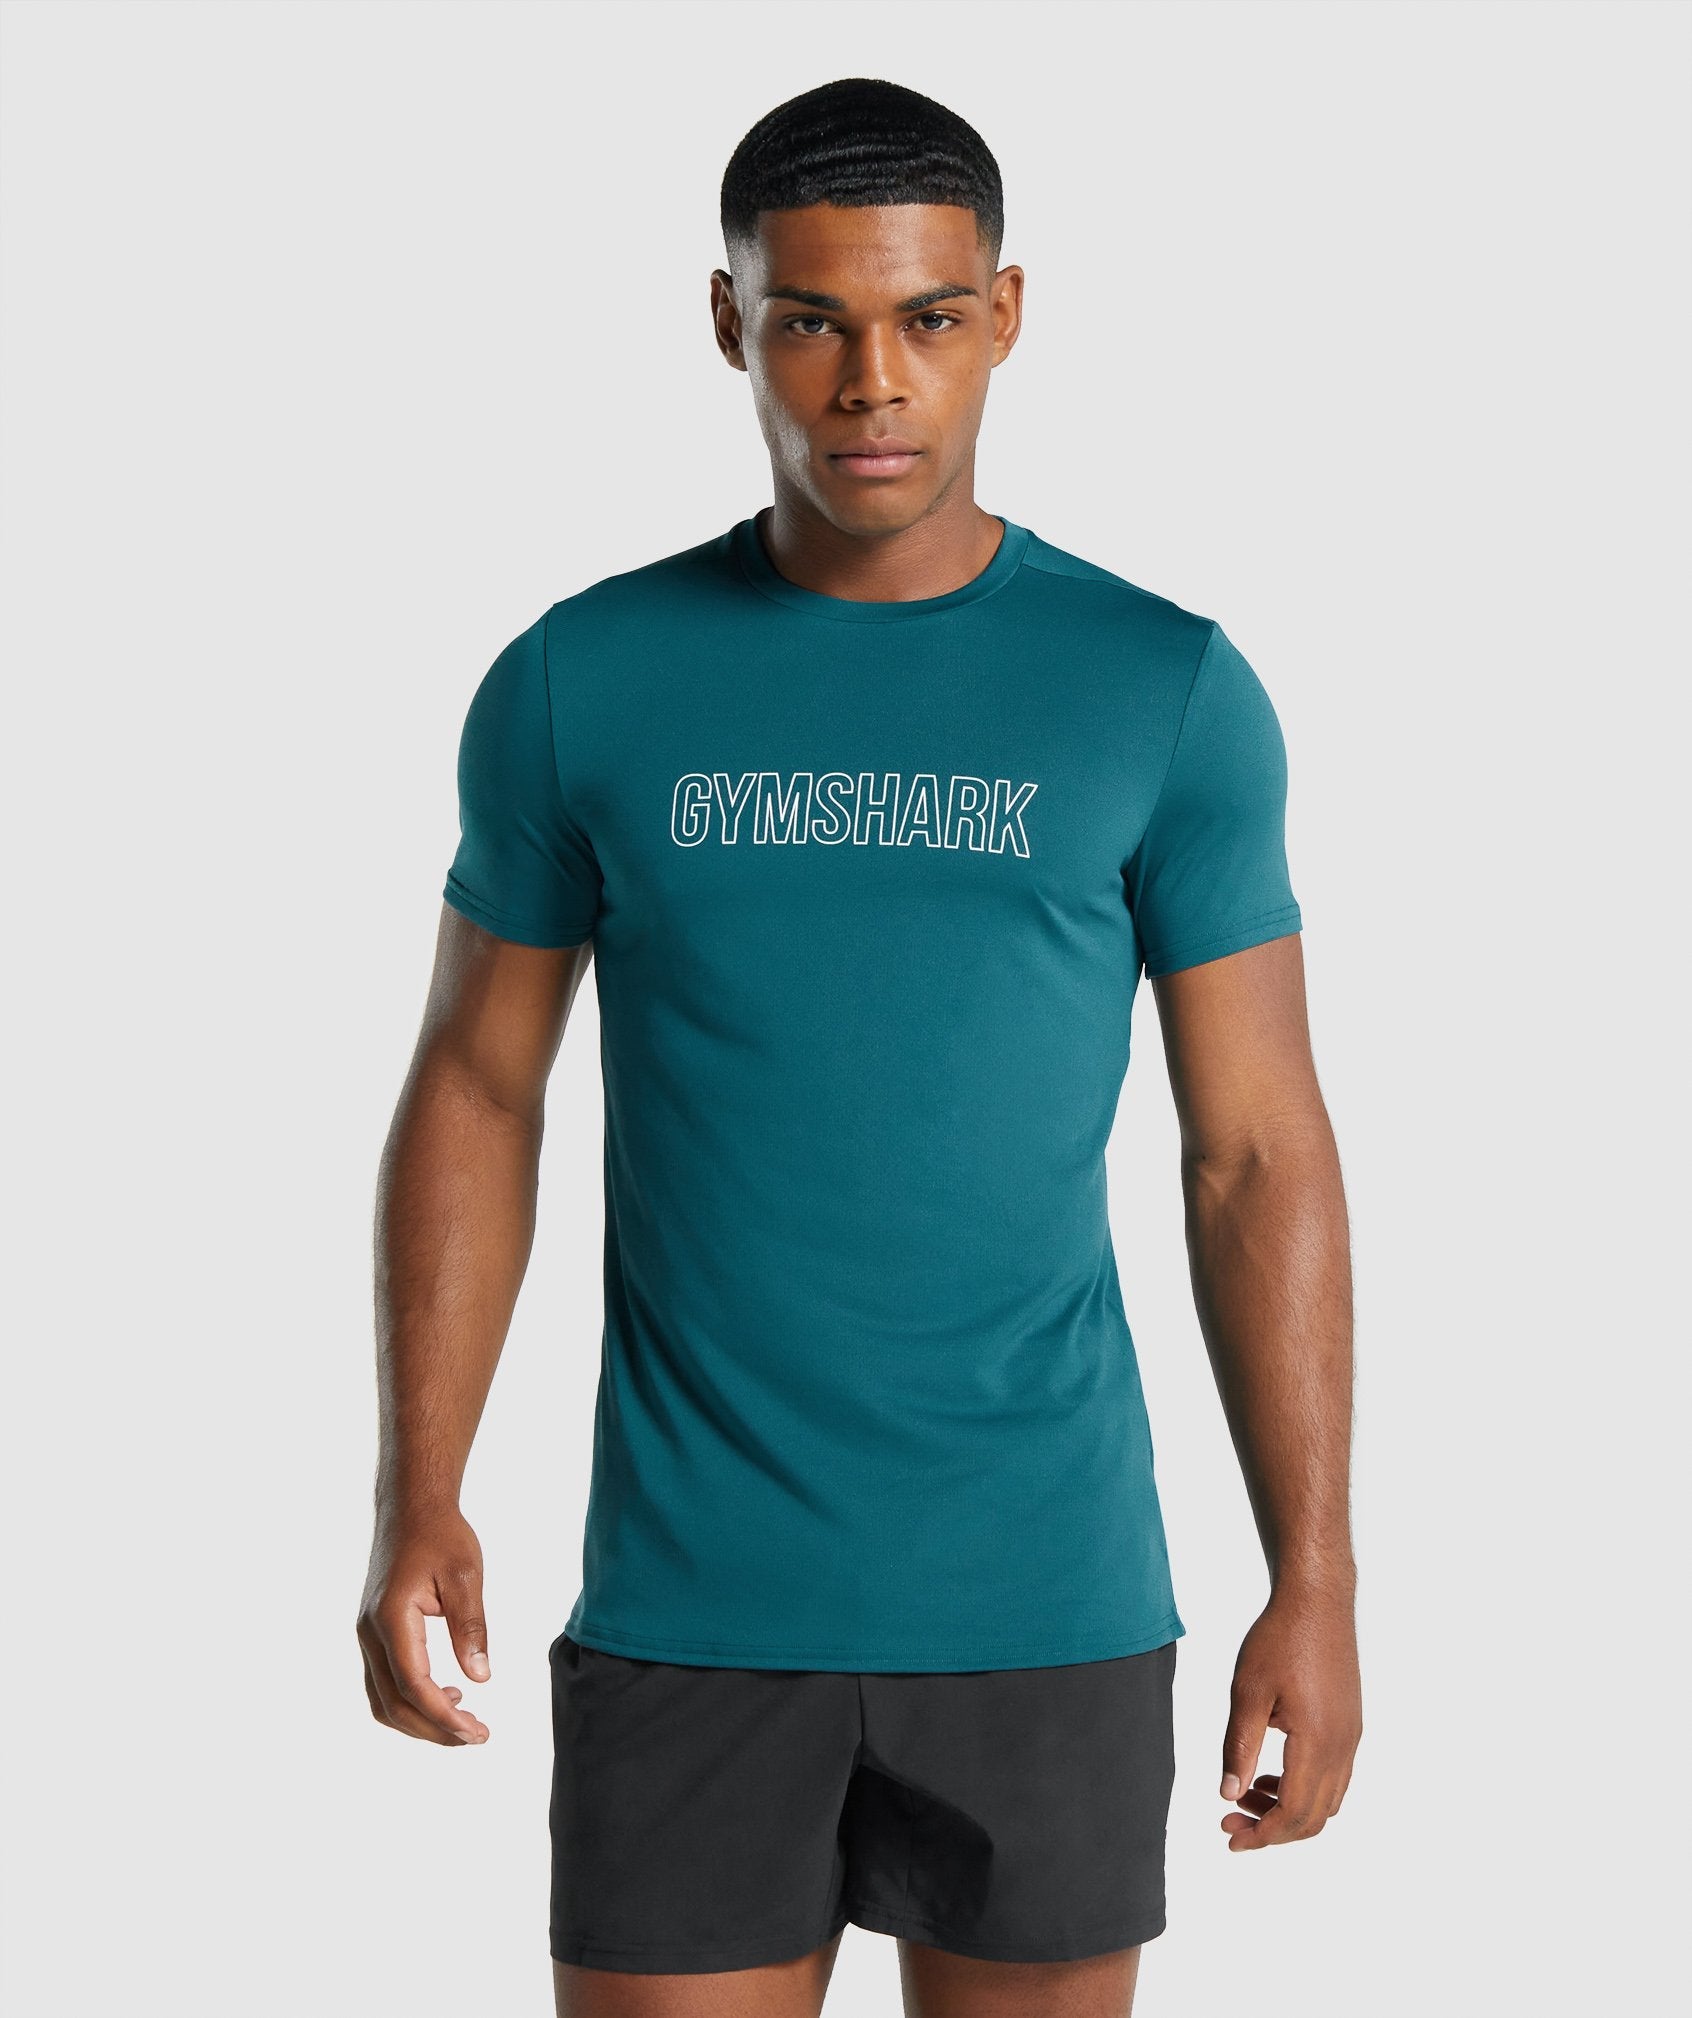 Gymshark Mens XL Arrival Graphic T-Shirt Navy Blue Slim Fit Short